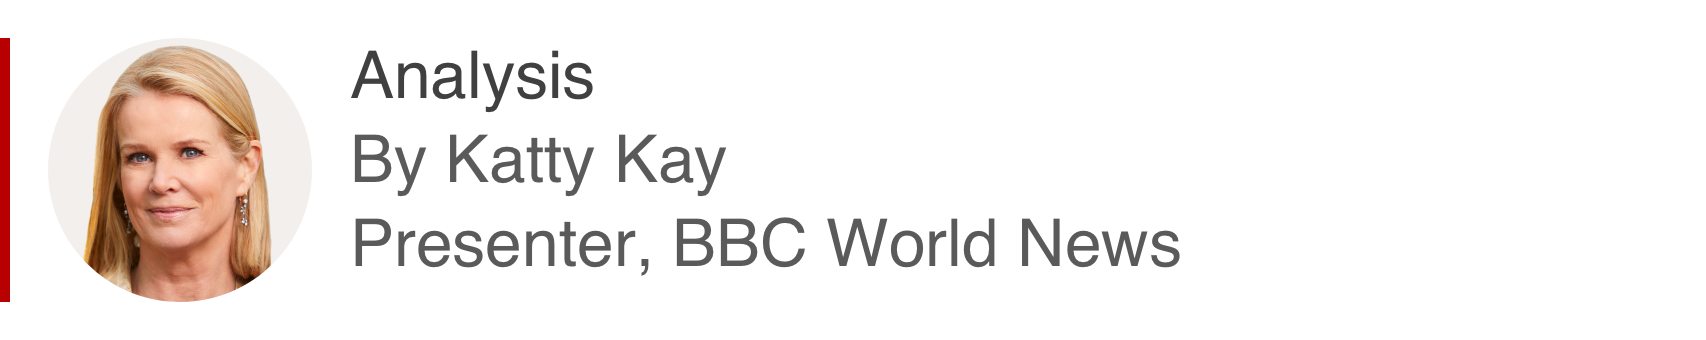 Analysis box by Katty Kay, presenter, BBC World News